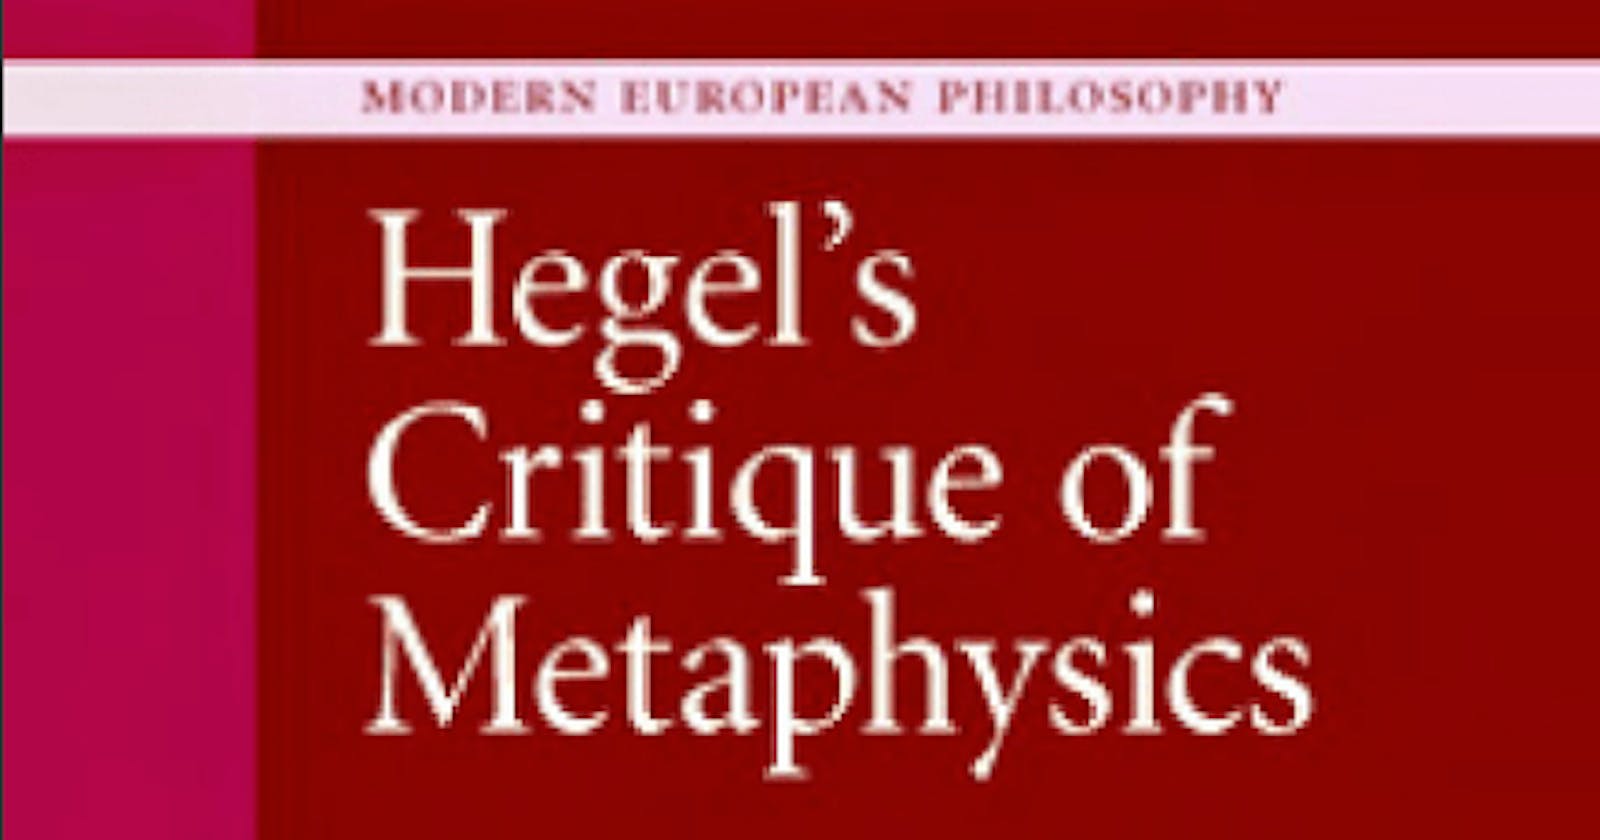 Hegel’s Critique of Metaphysics